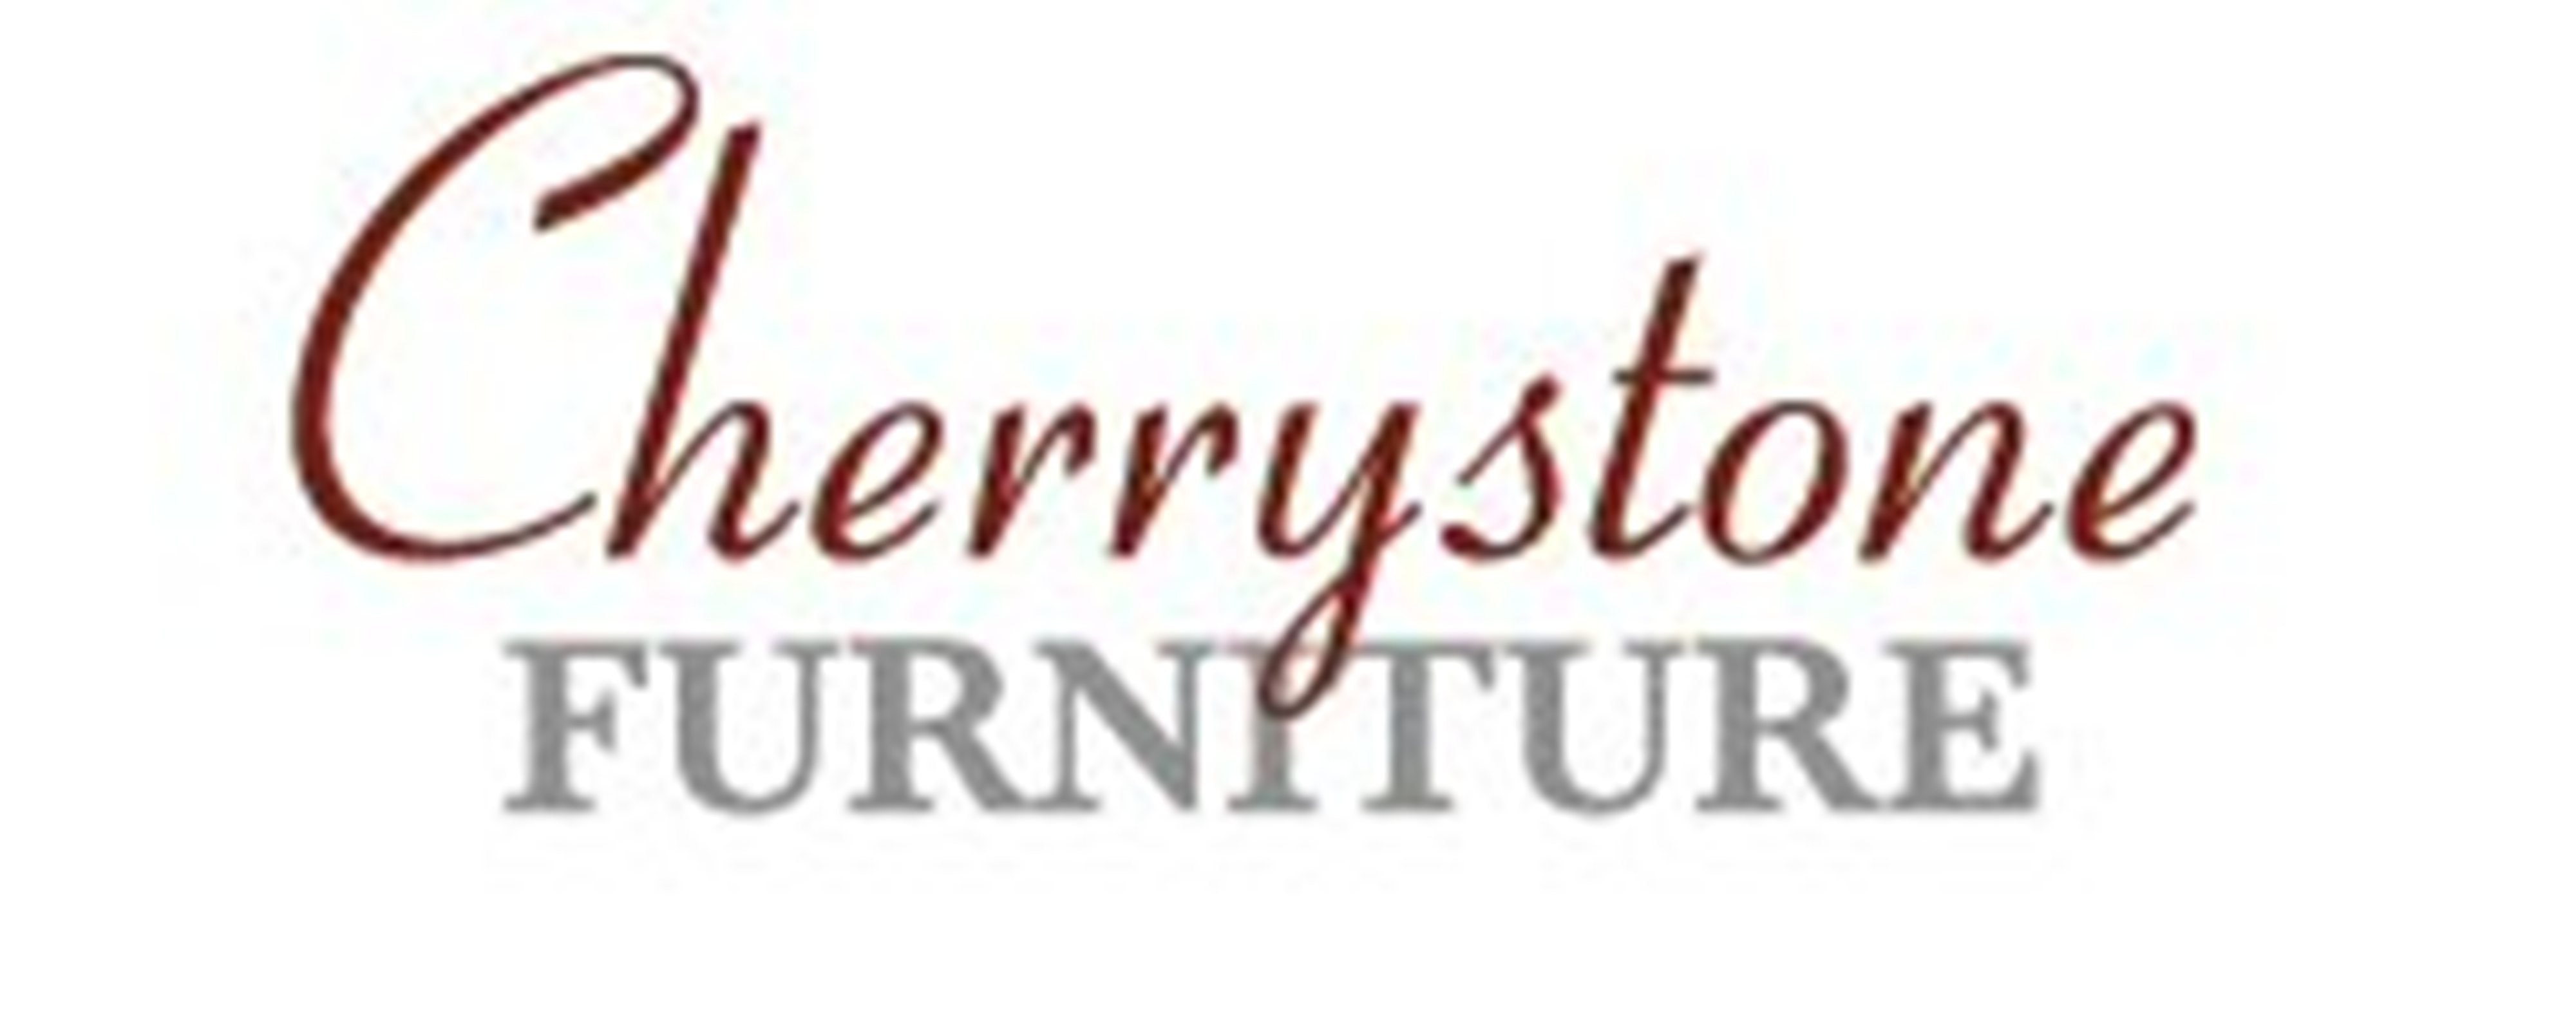 Cherrystone Furniture Logo